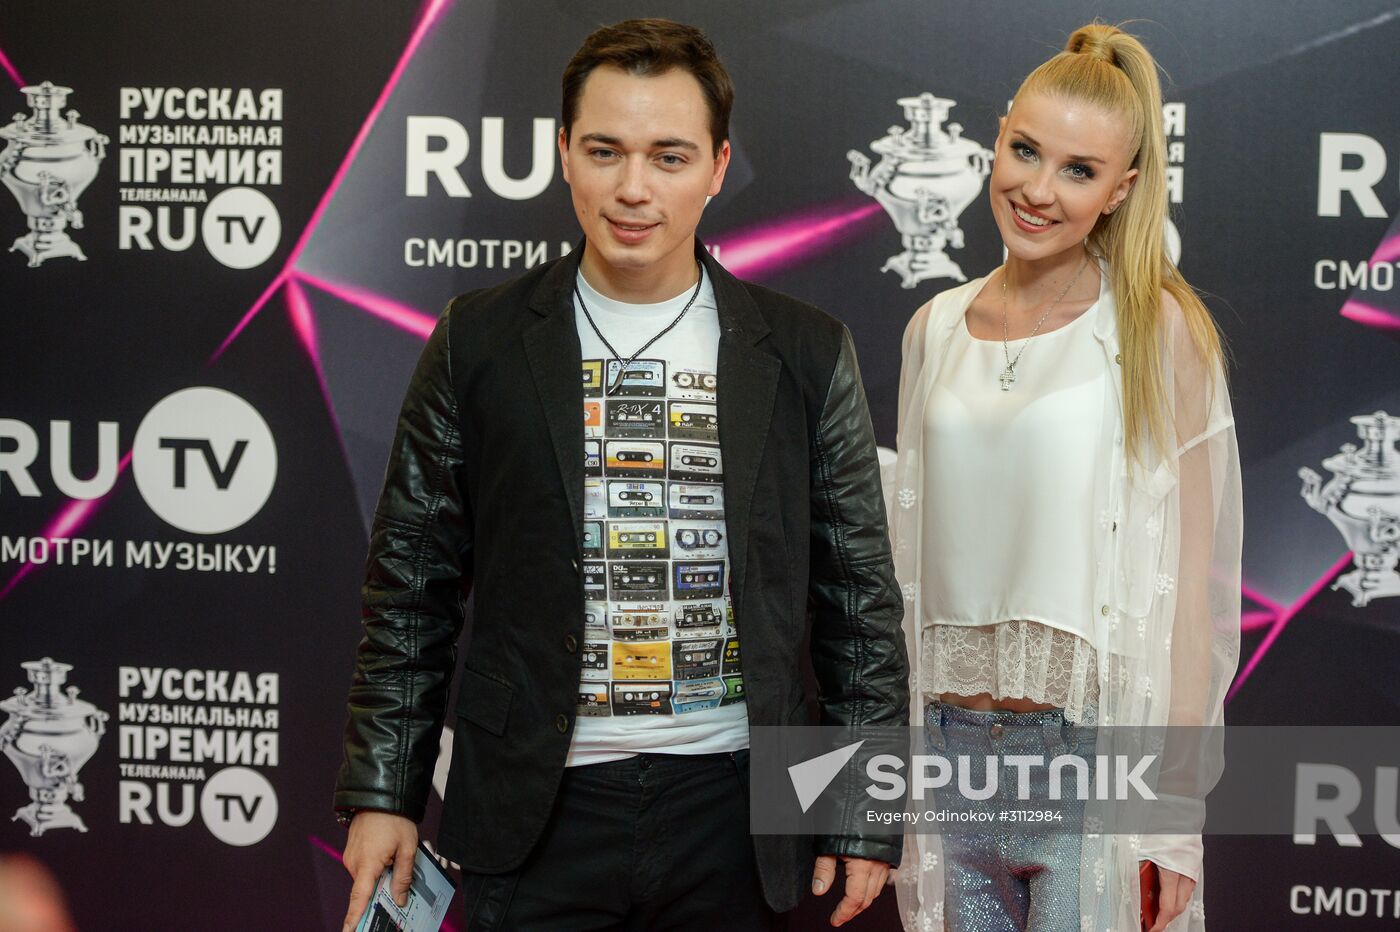 RU.TV music awards ceremony